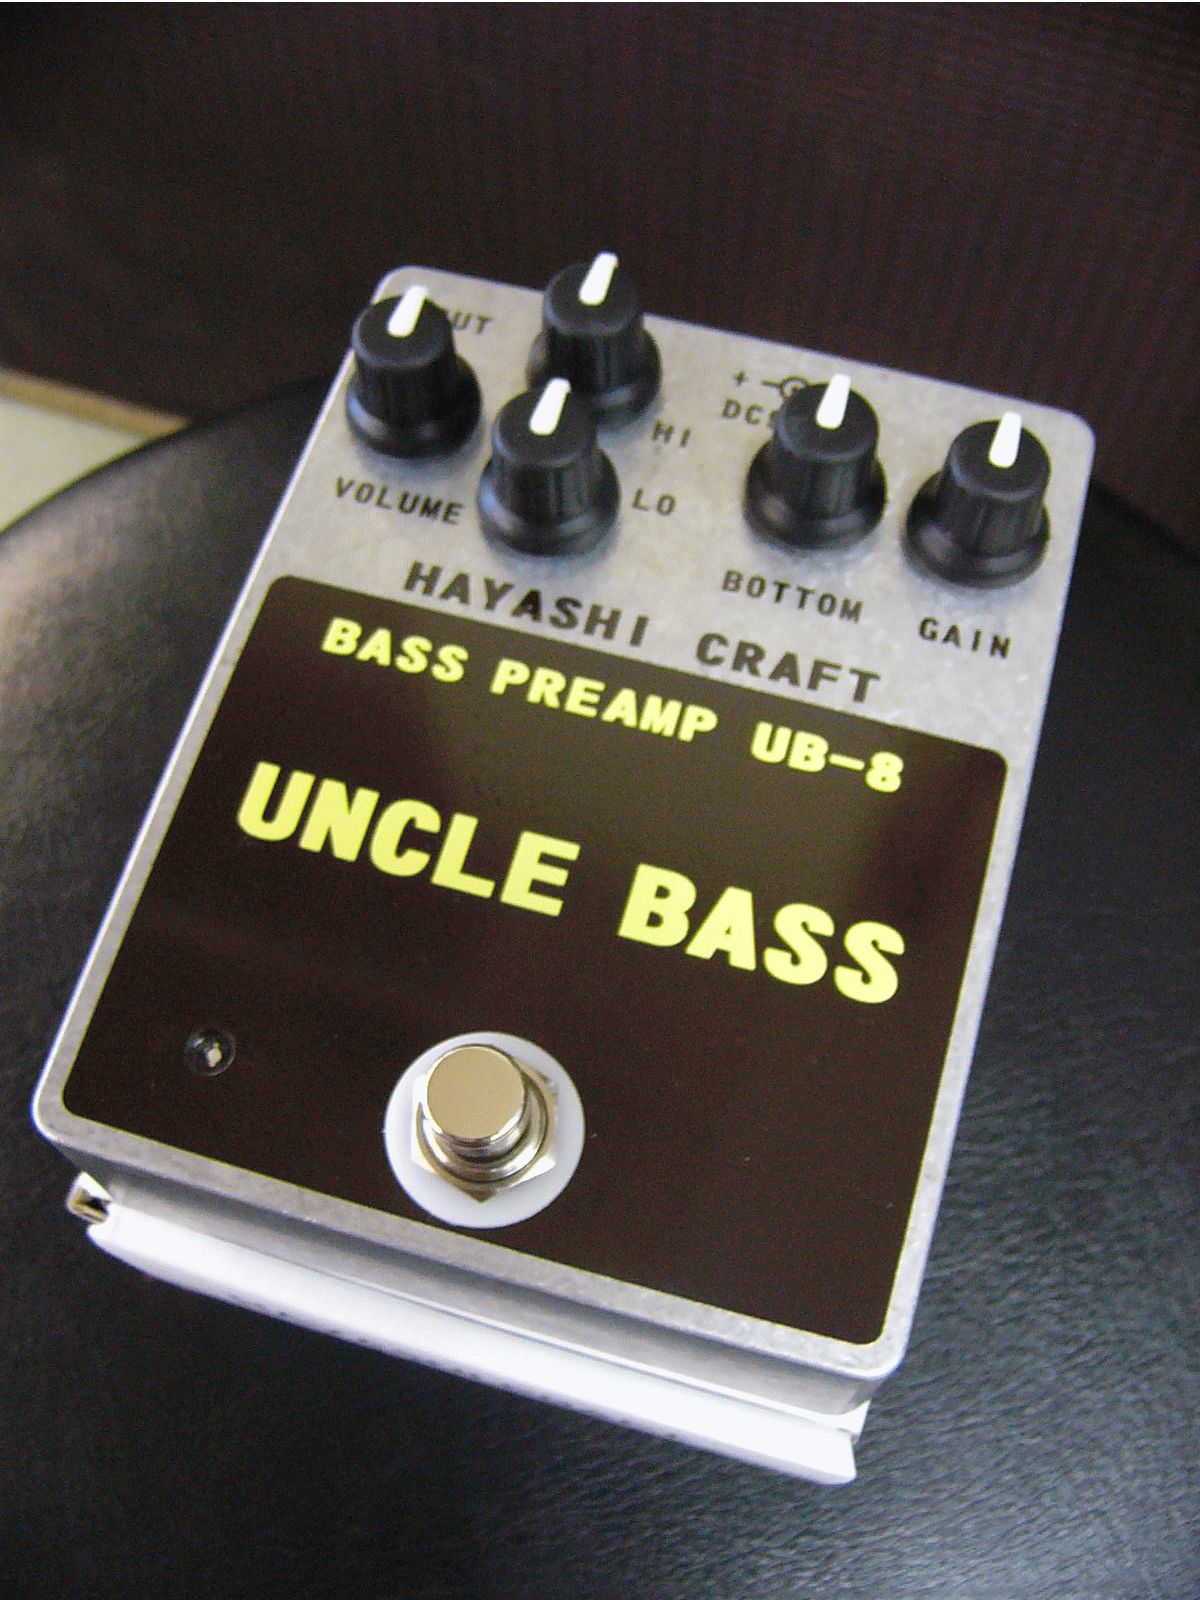 HAYASHI CRAFT Bass PreAmp UB-8 Uncle Bass